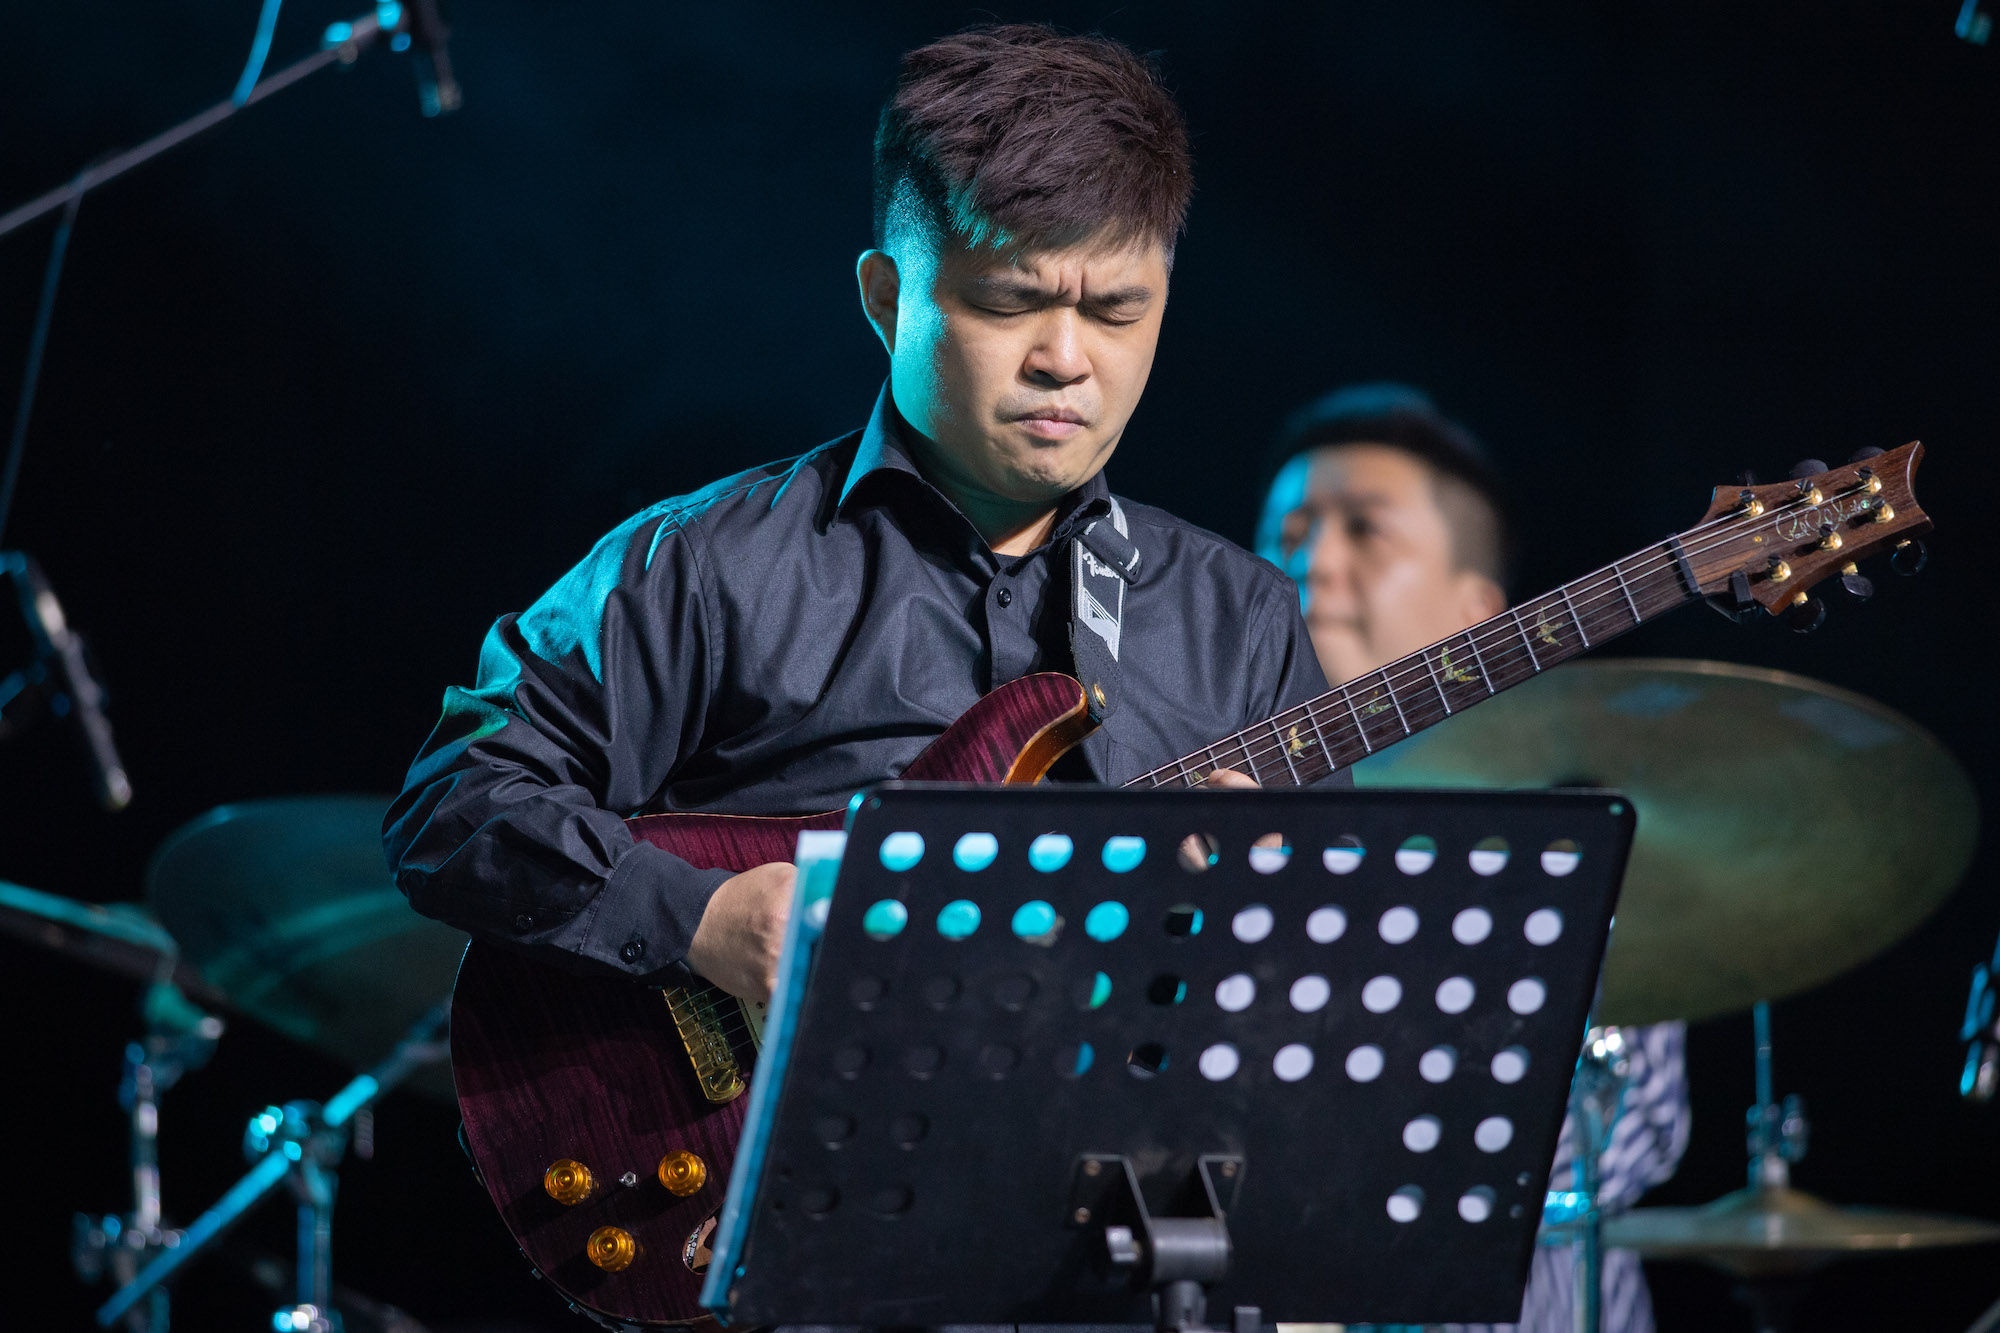 Jazz guitarist, Hon Chong Chan